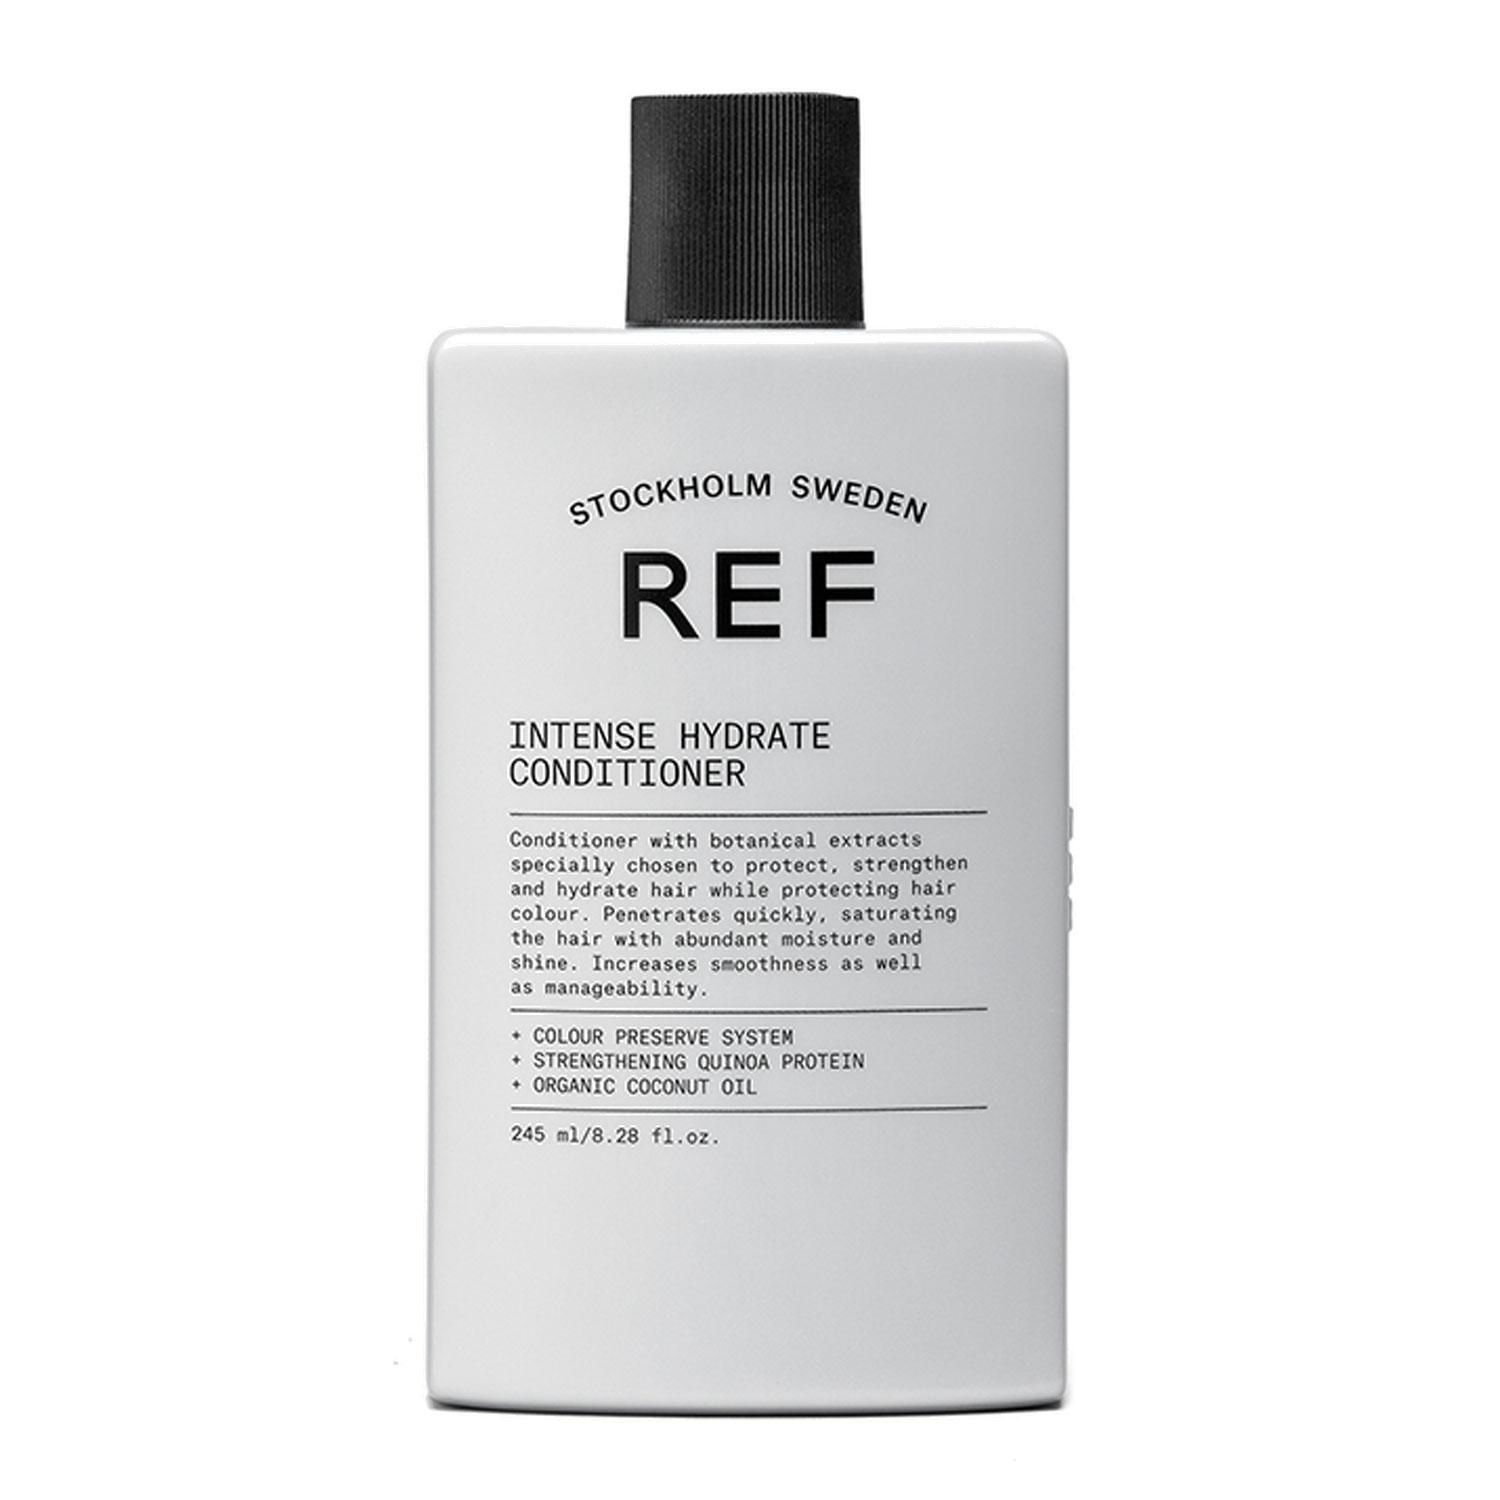 REF Treatment - Intense Hydrate Conditioner